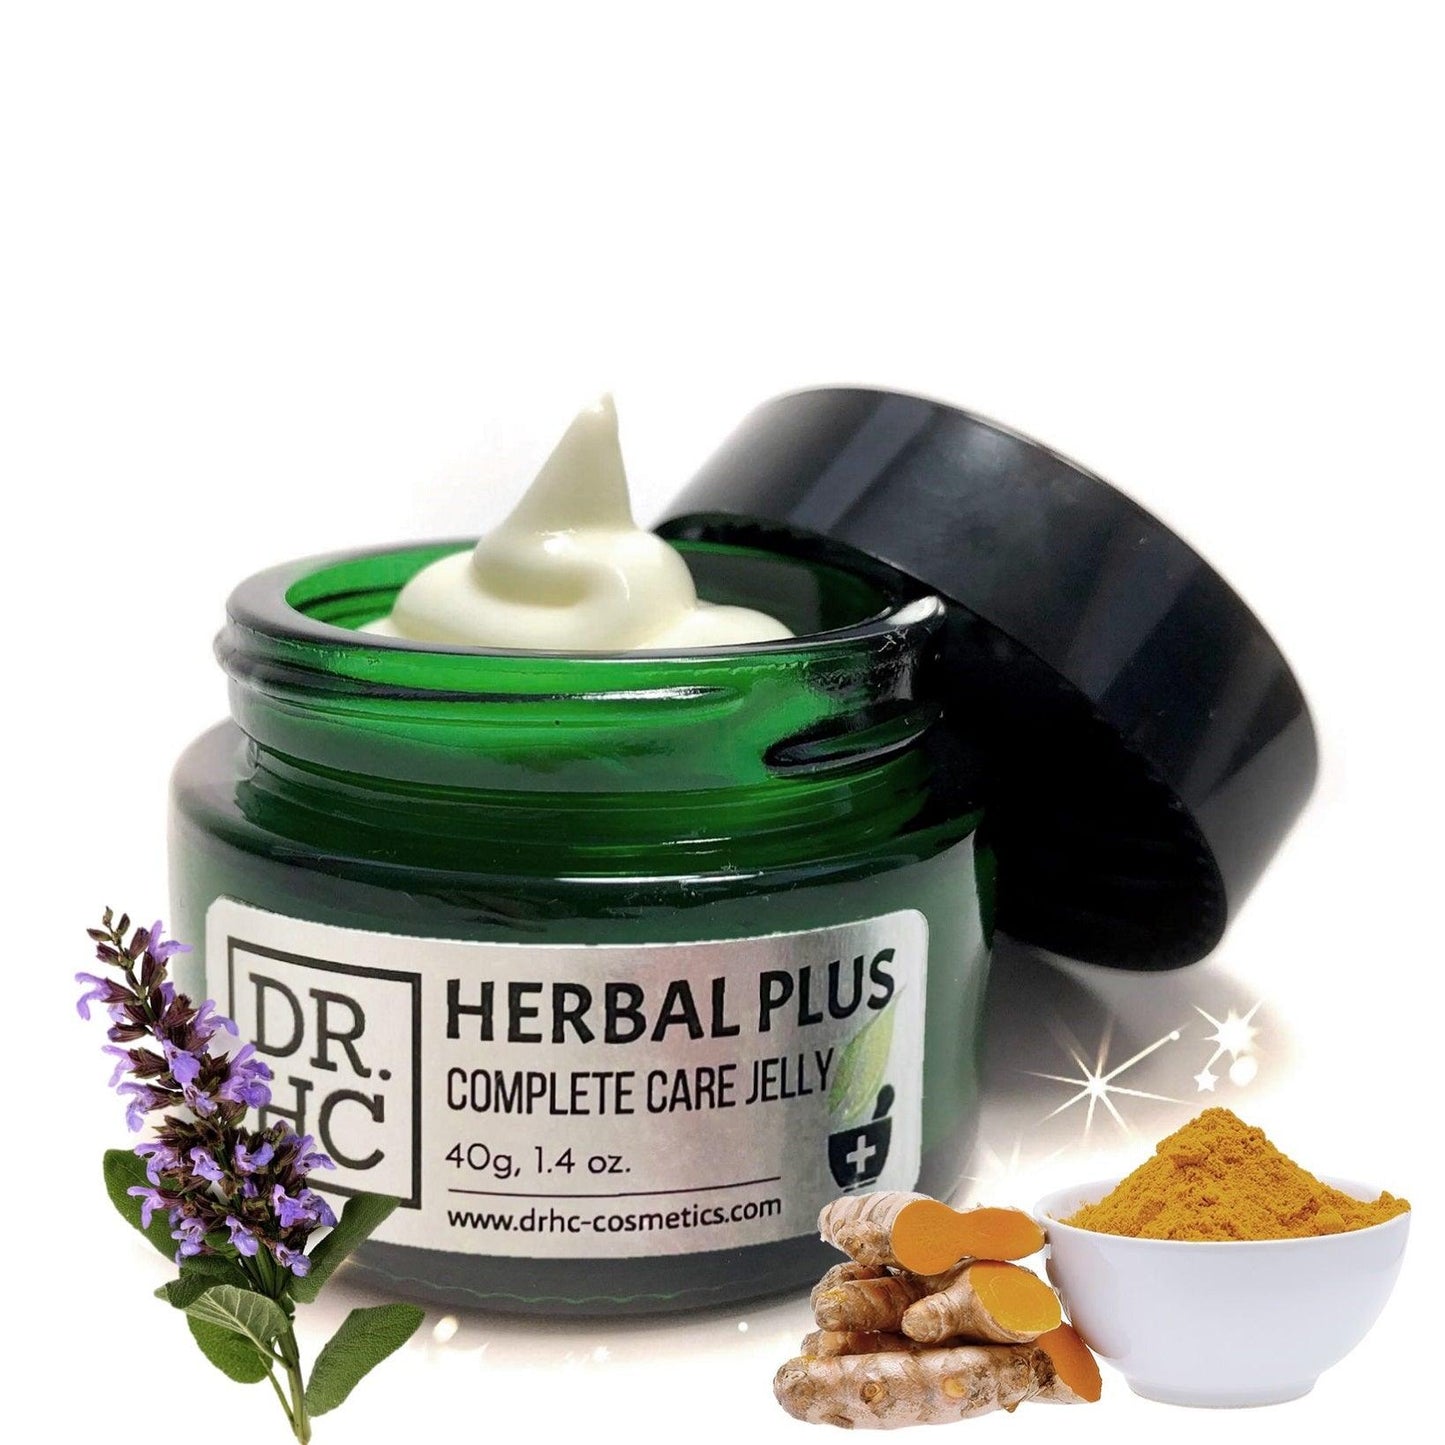 DR.HC Herbal Plus Complete Care Jelly (25~40g, 0.9~1.4oz) (Anti-acne, Anti-scar, Anti-blemish, Anti-inflammatory, Anti-aging, Skin plumping...)